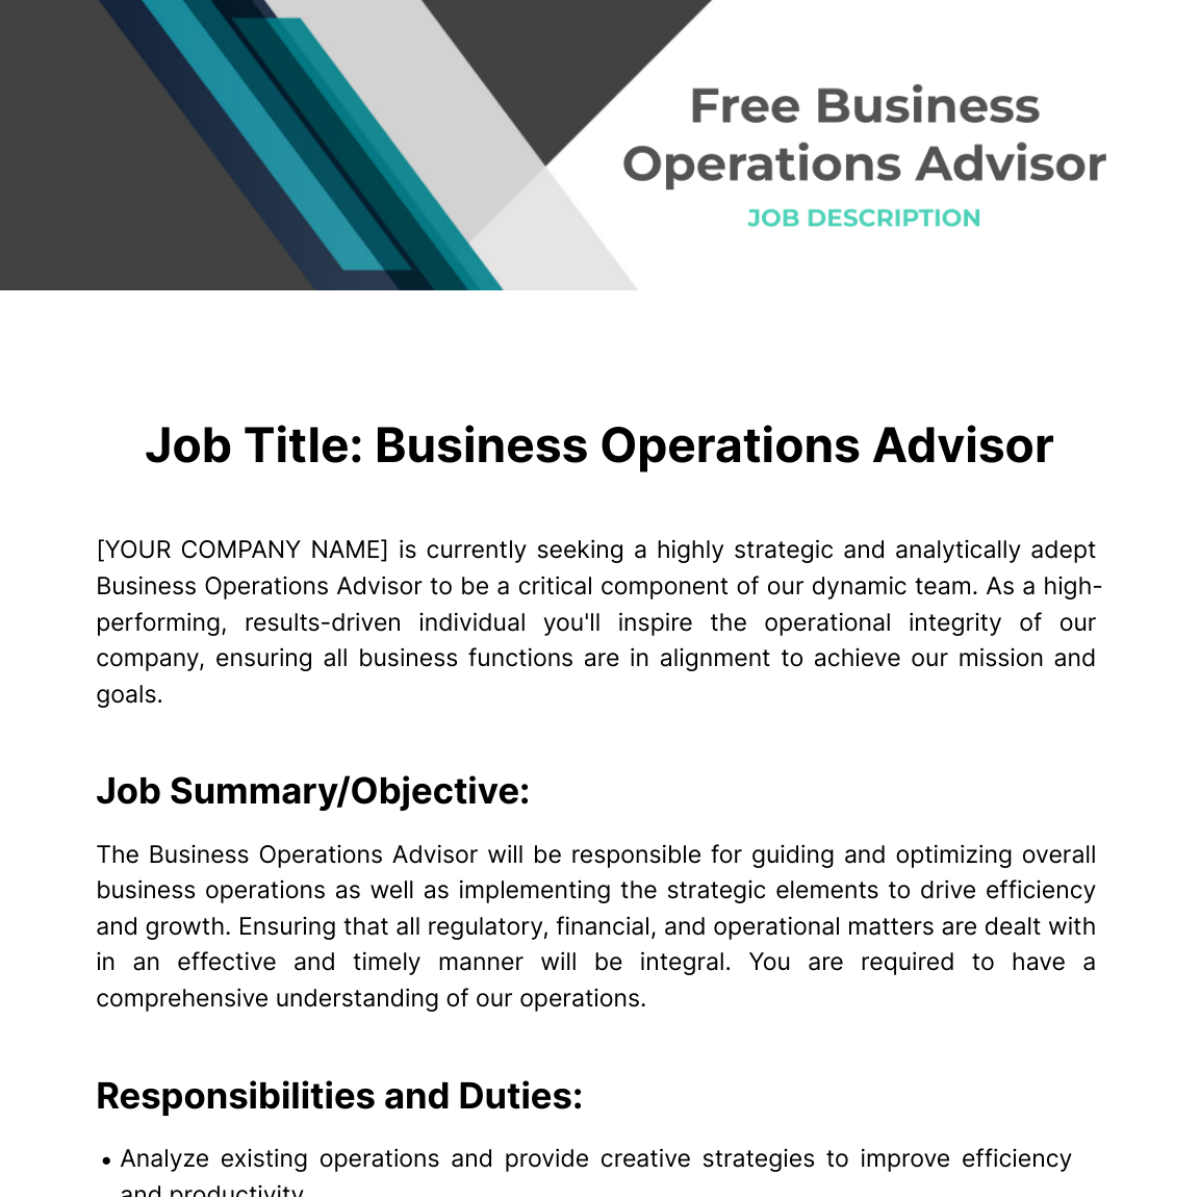 Free Business Operations Advisor Job Description Template